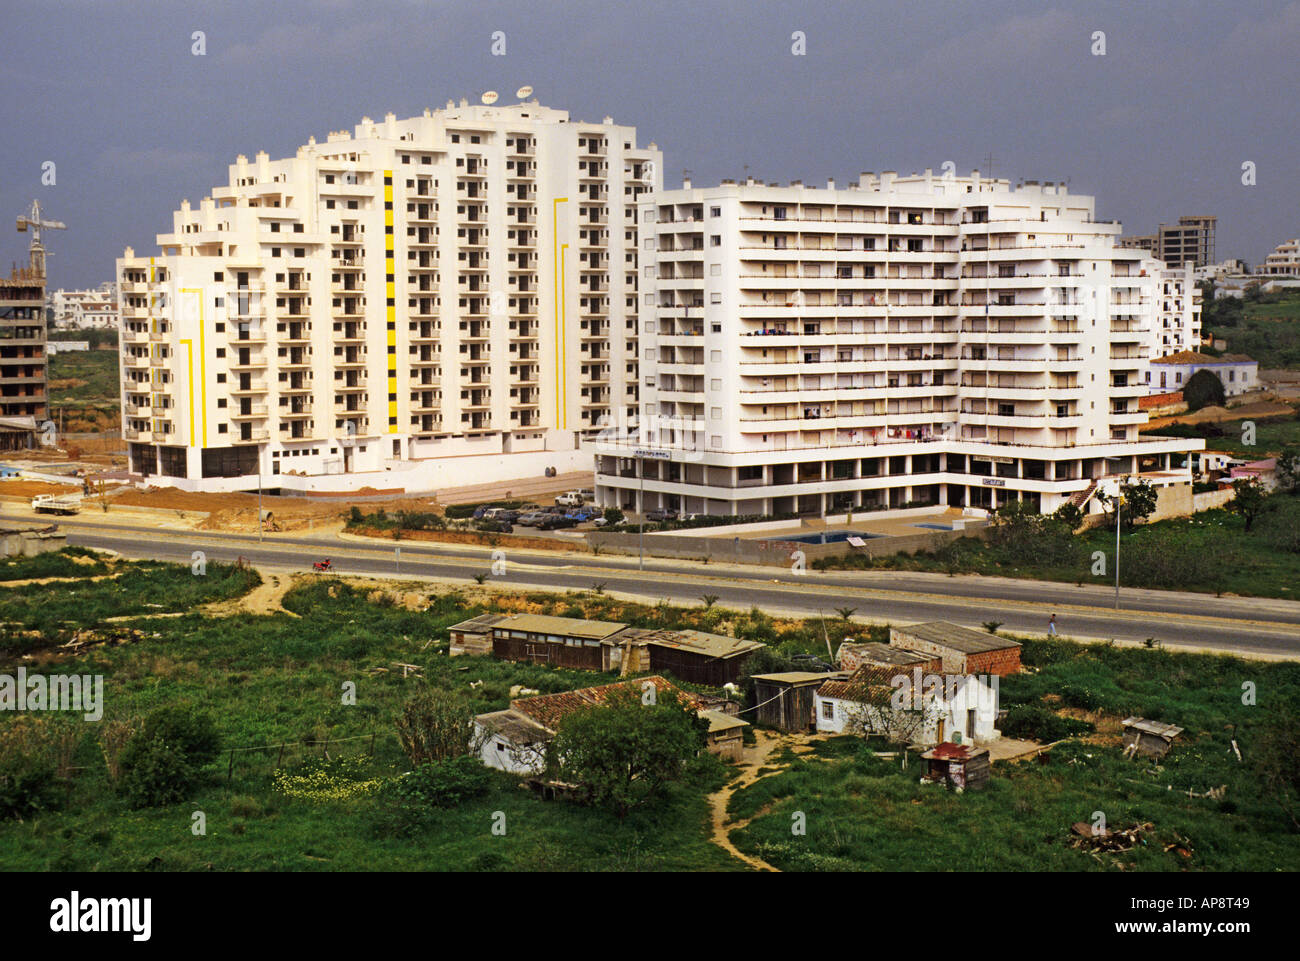 New hotels and apartments opposite old houses Praia da Rocha Algarve Portugal Europe Stock Photo